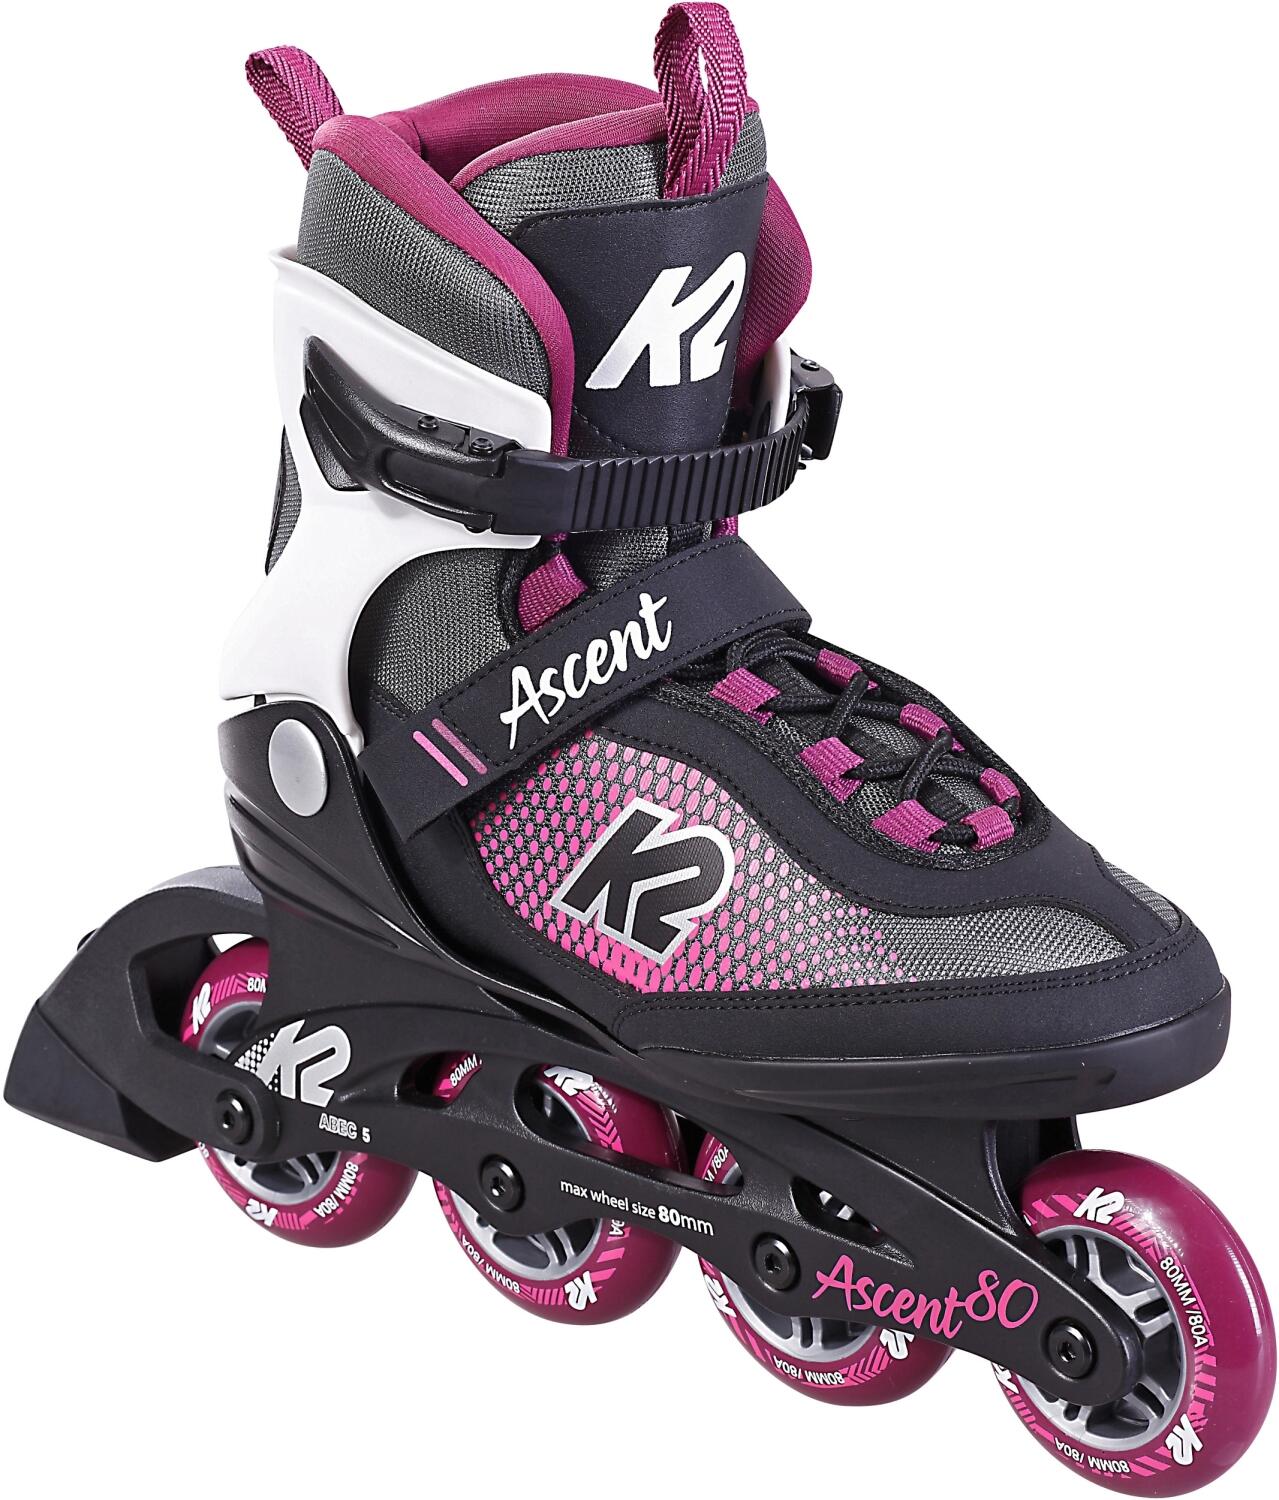 K2 Ascent 80 Inlineskate Damen (Größe: 37.0 (US=7.0), design) von K2 Skates